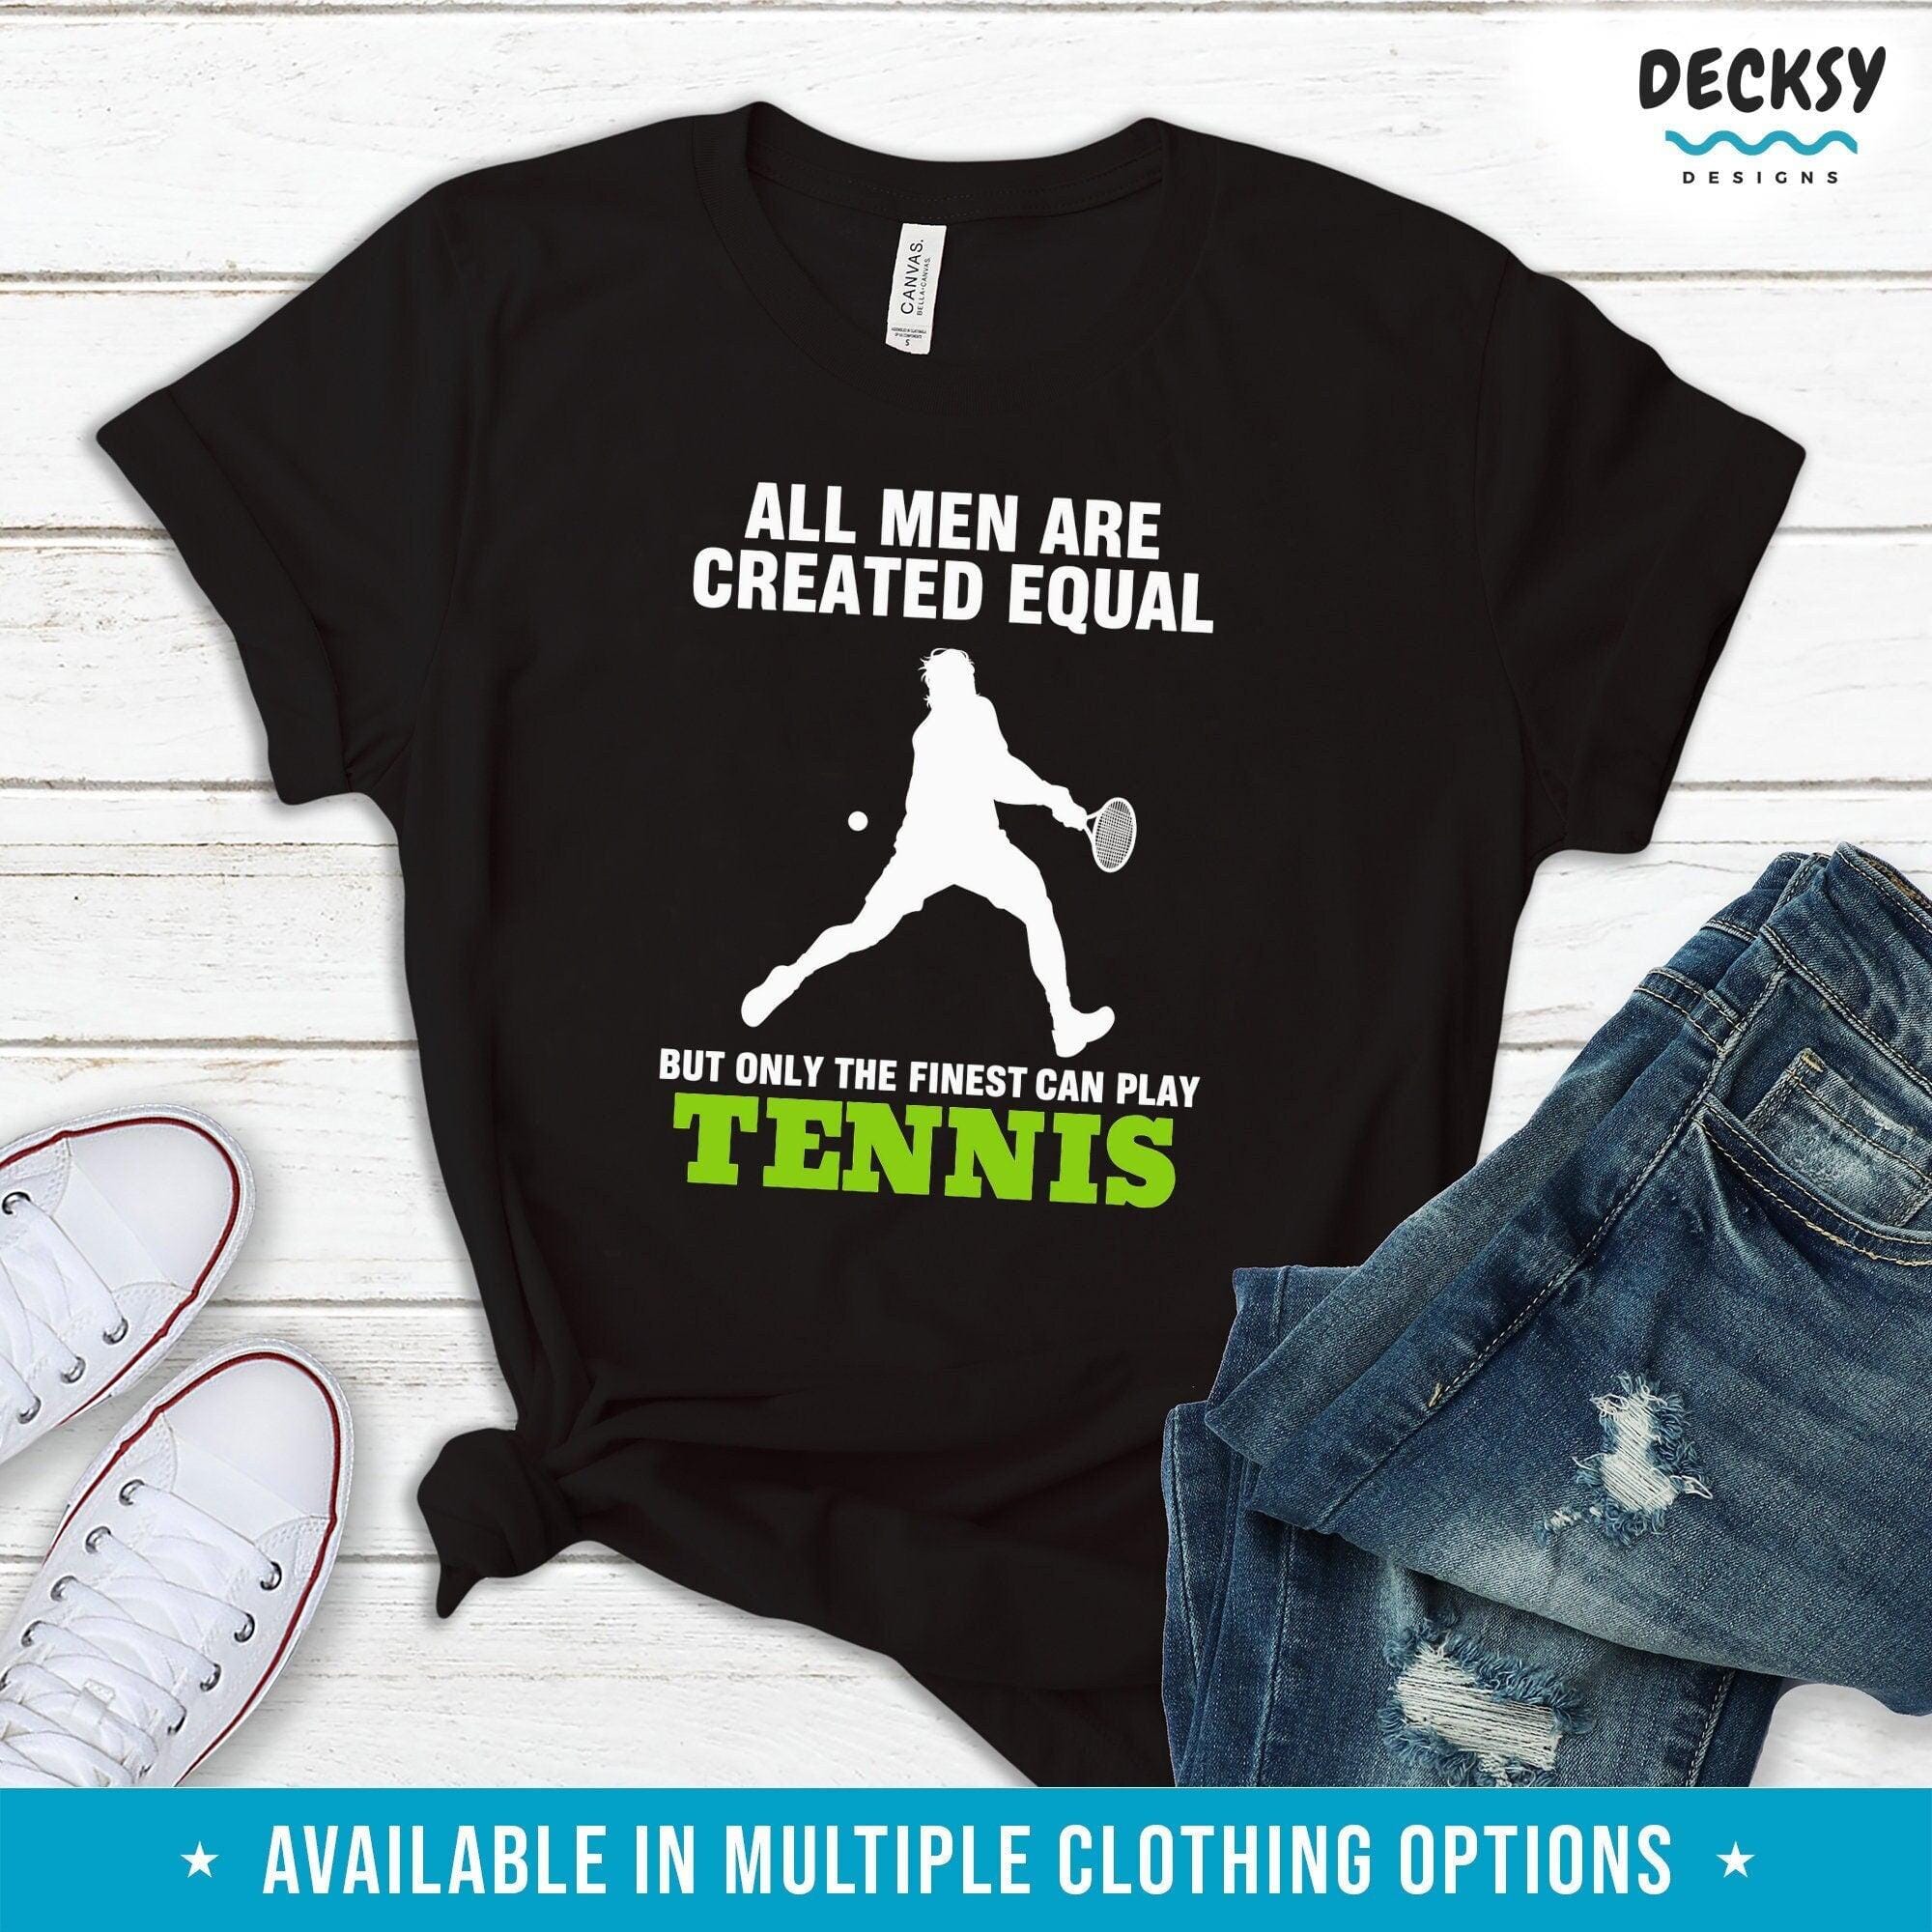 Tennis Shirt Men, Tennis Player Gift-Clothing:Gender-Neutral Adult Clothing:Tops & Tees:T-shirts:Graphic Tees-DecksyDesigns